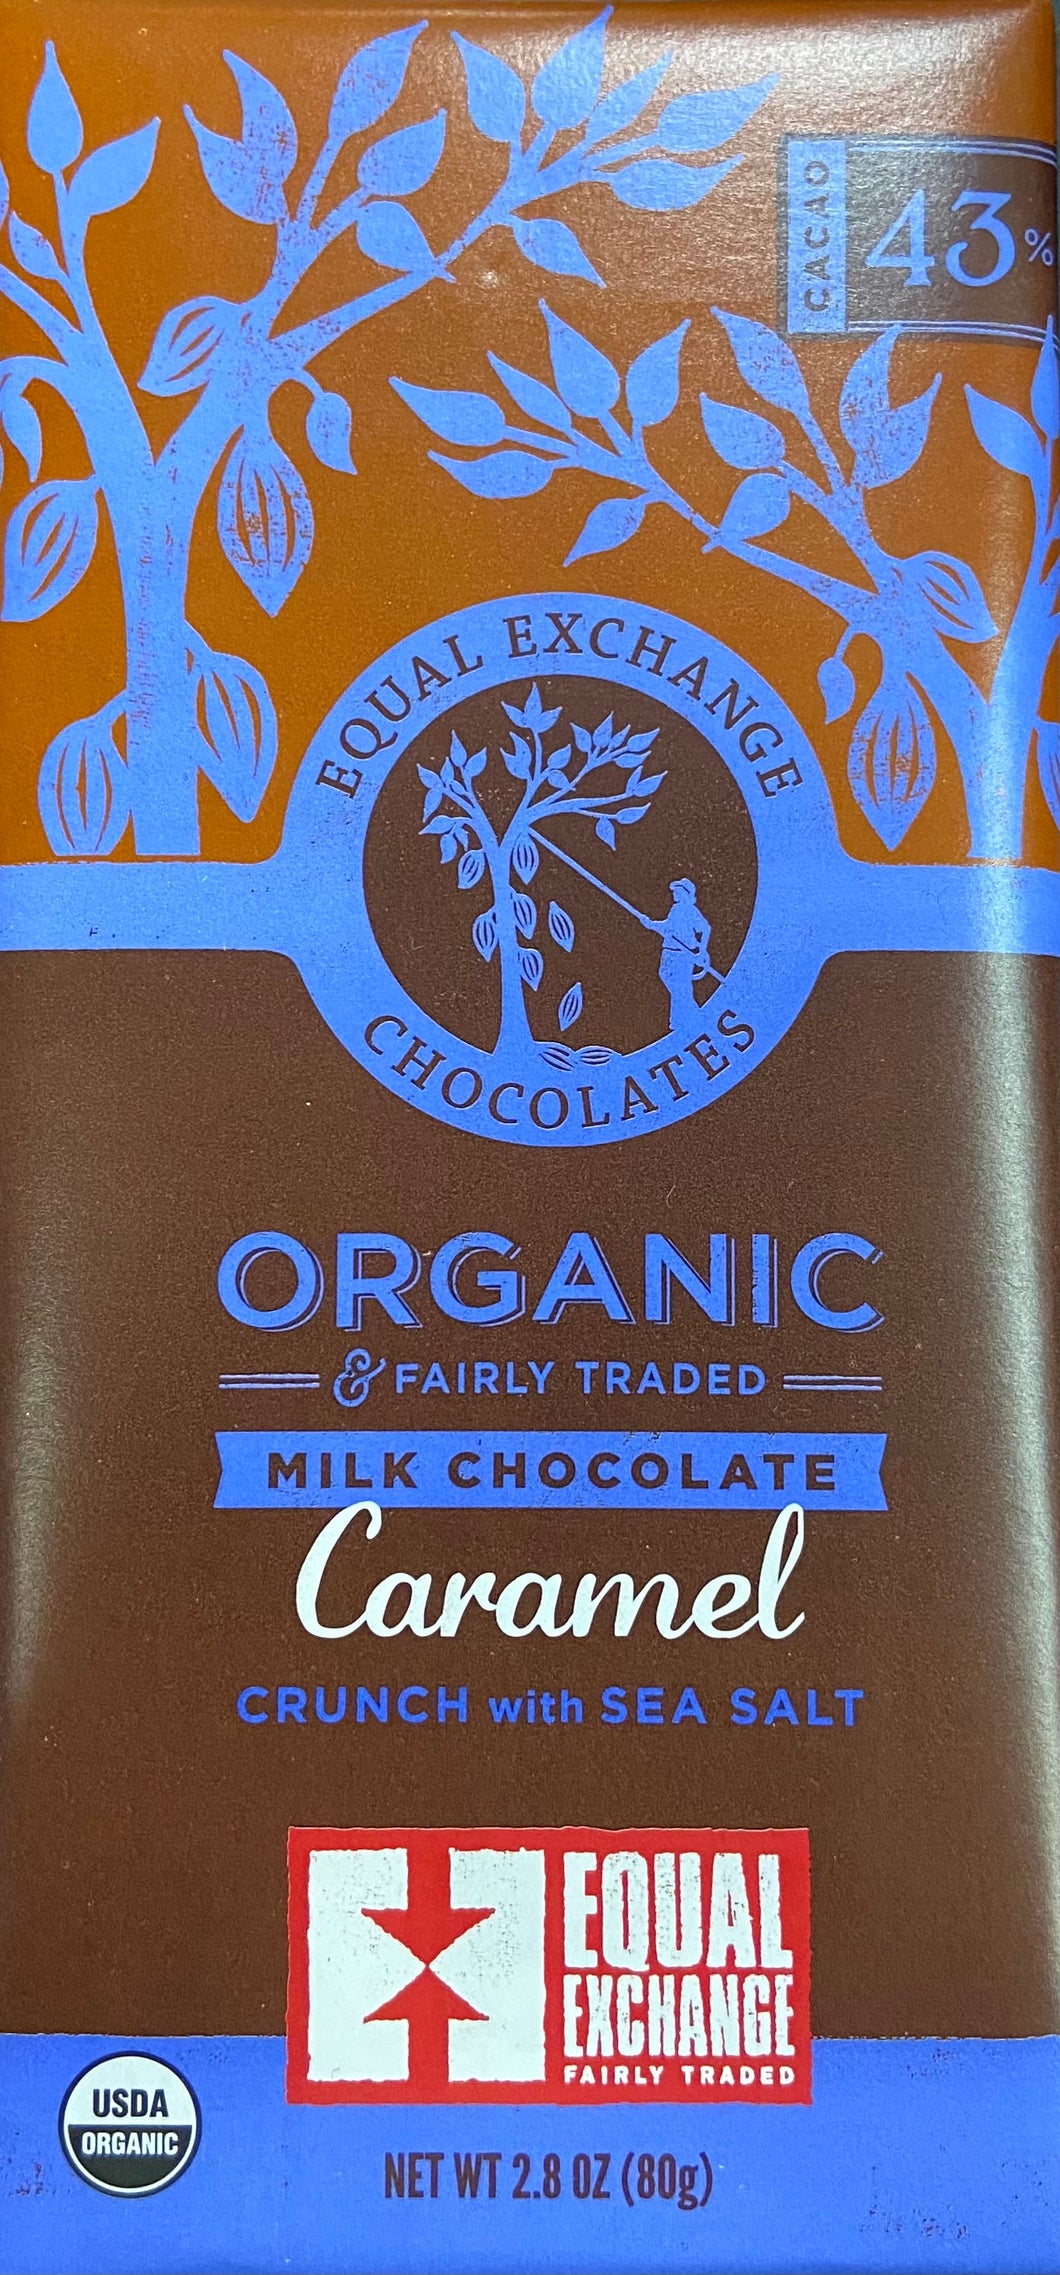 Chocolate Bar, Milk Caramel Crunch with Sea Salt, Organic 43% Cacao, Equal Exchange